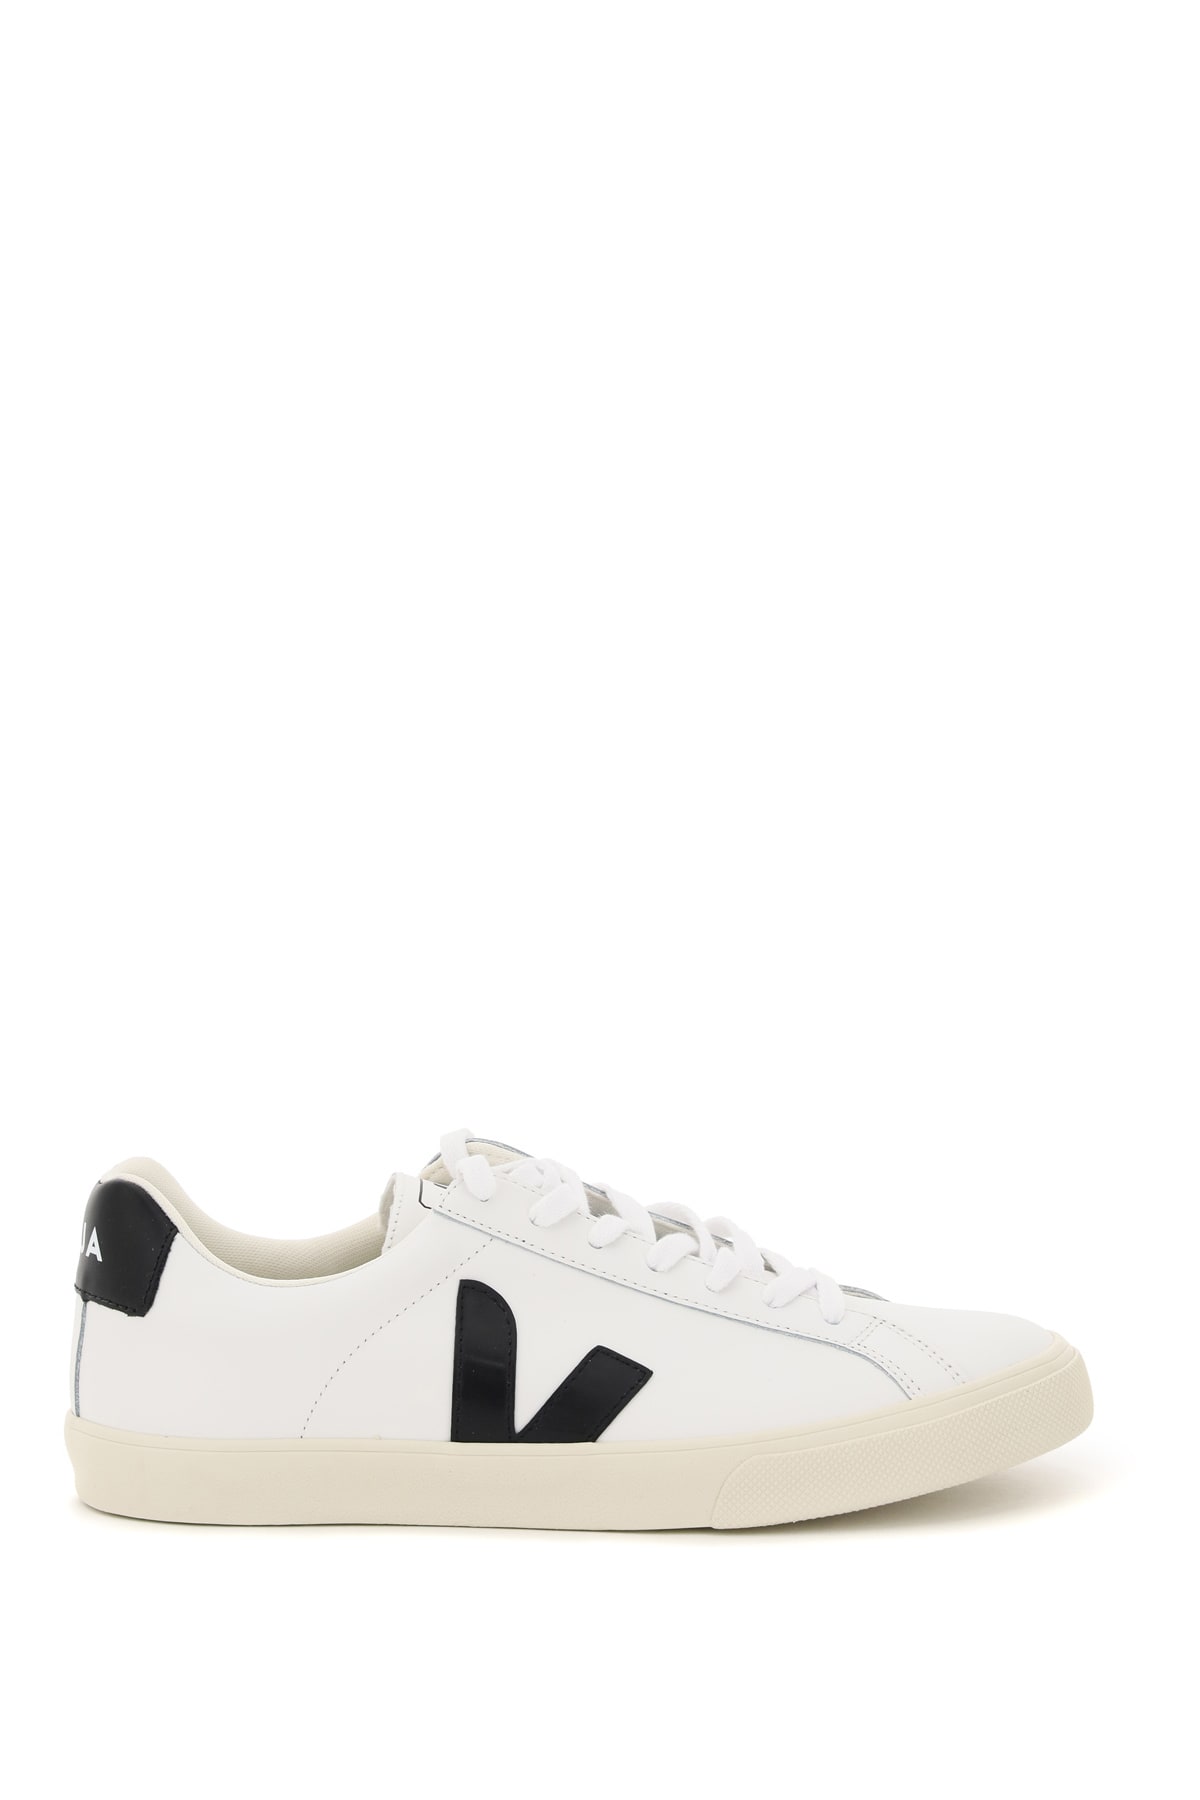 Shop Veja Esplar Leather Sneakers In Extra White Black (white)